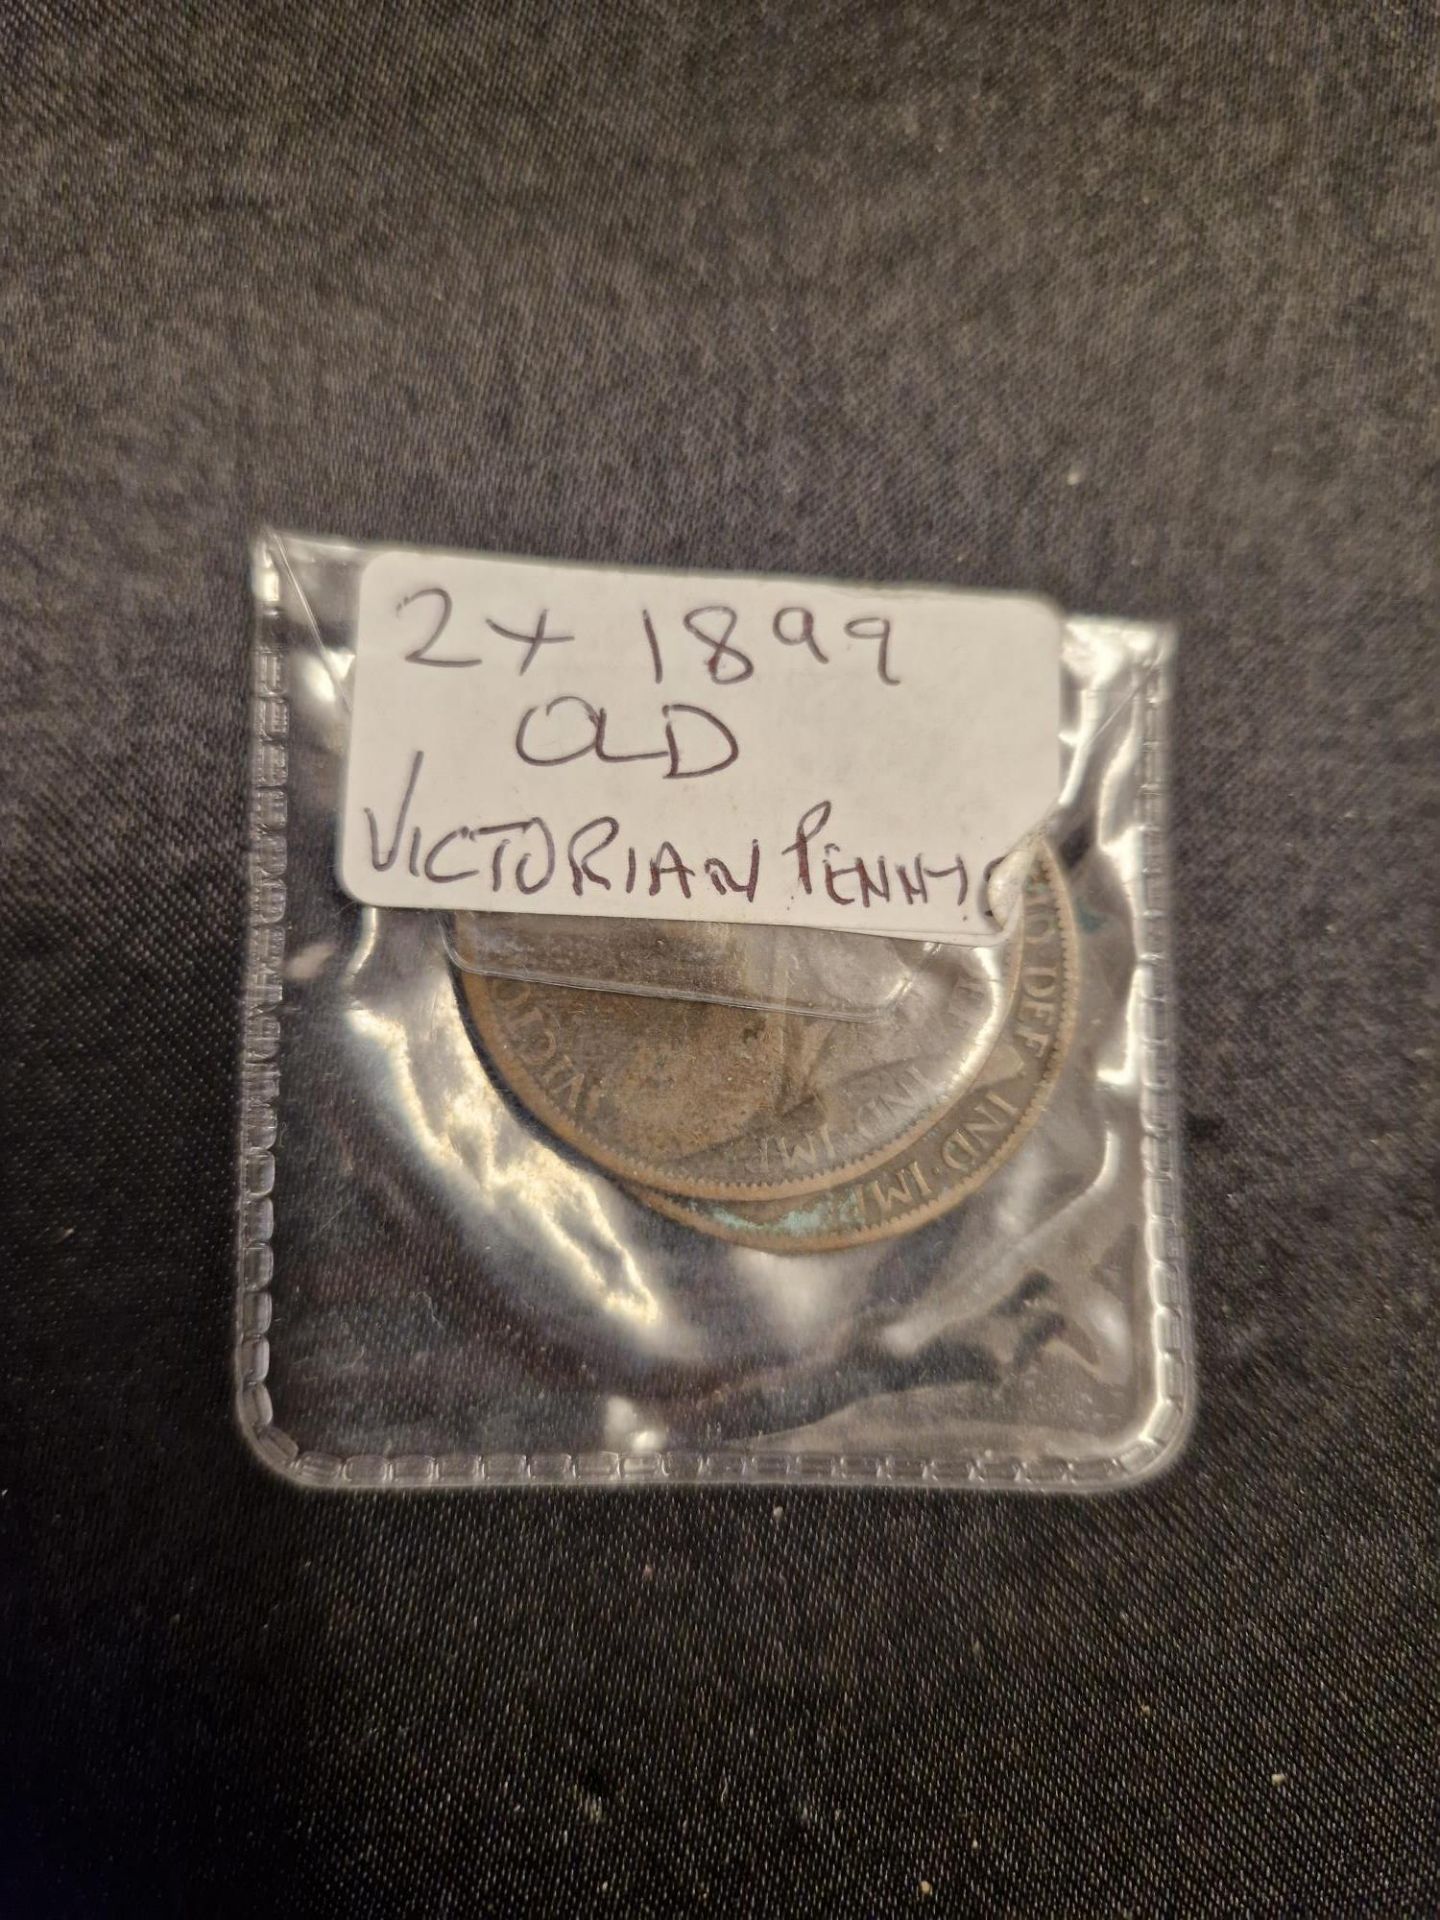 2x 1899 victorian pennys